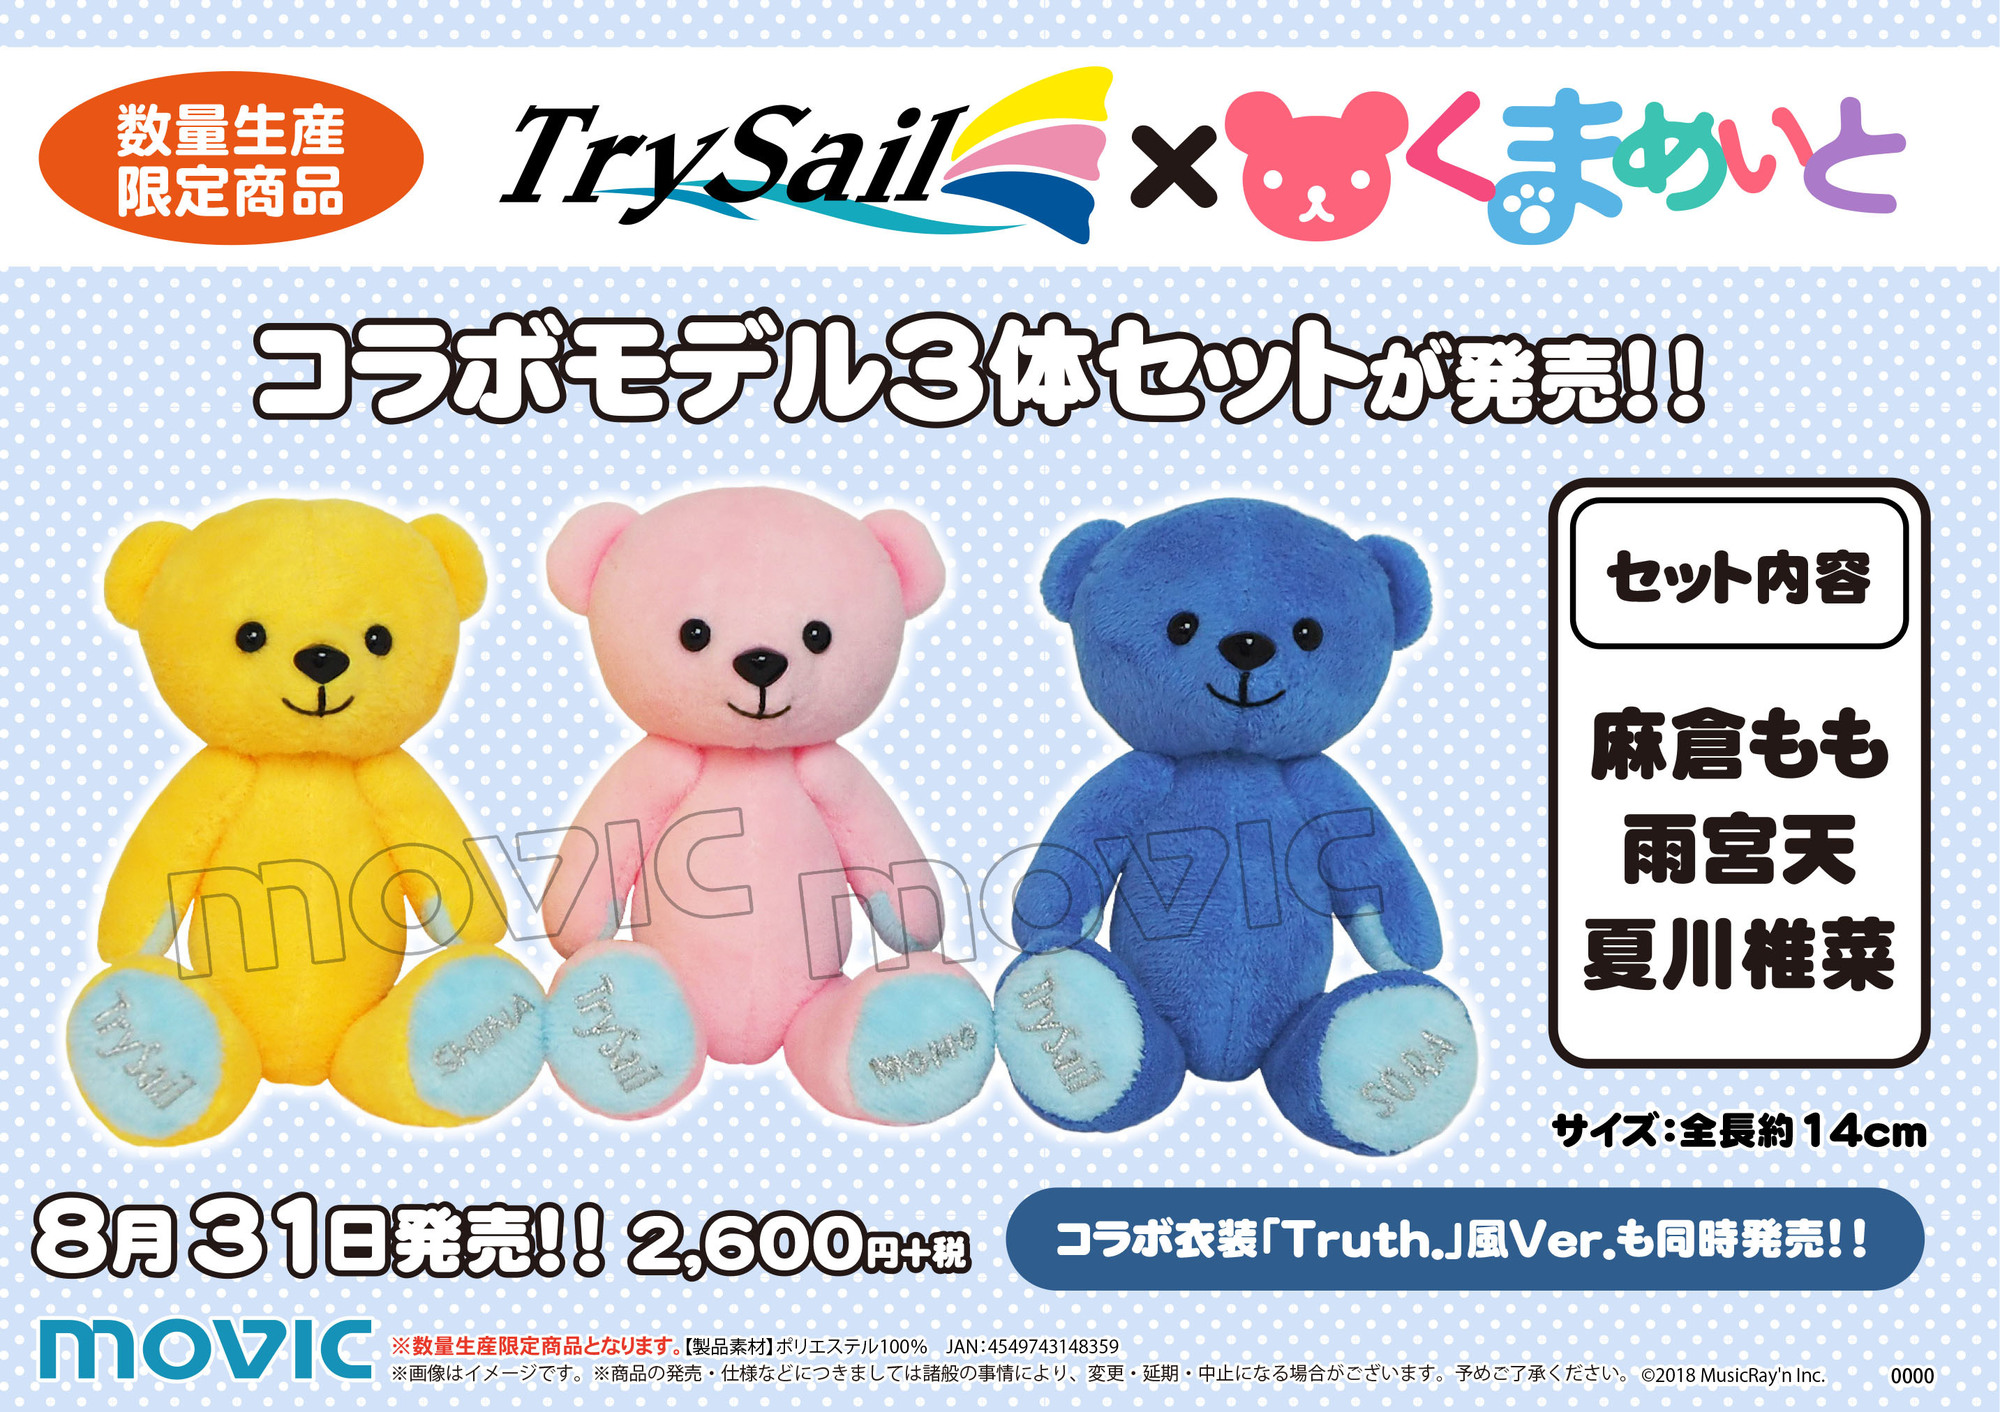 Trysail くまめいと コラボ商品 取寄せ販売及び店頭販売決定 Trysail Portal Square トライセイルポータルスクエア